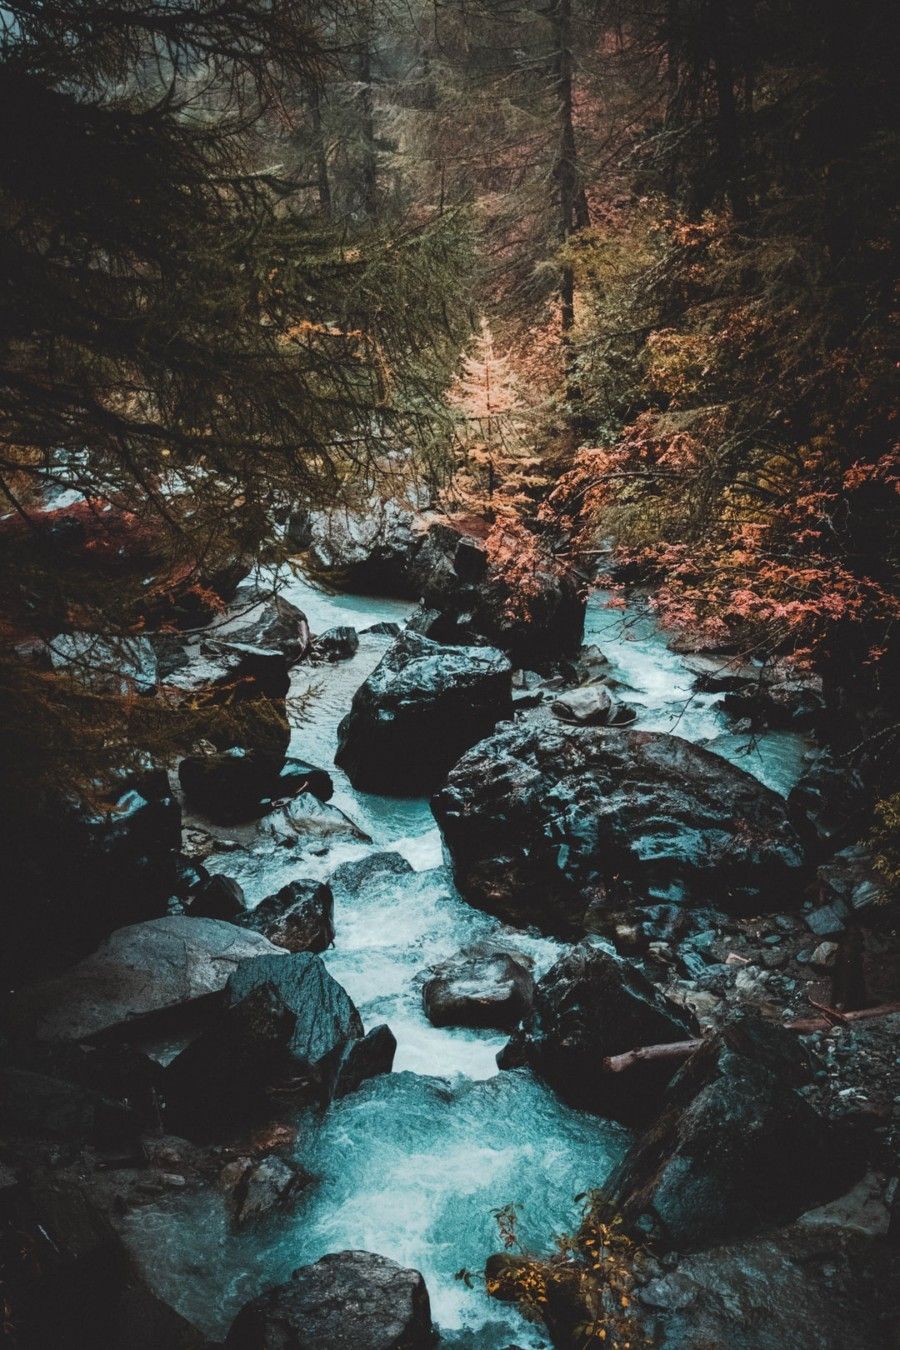 gray-rocks-in-river-between-trees